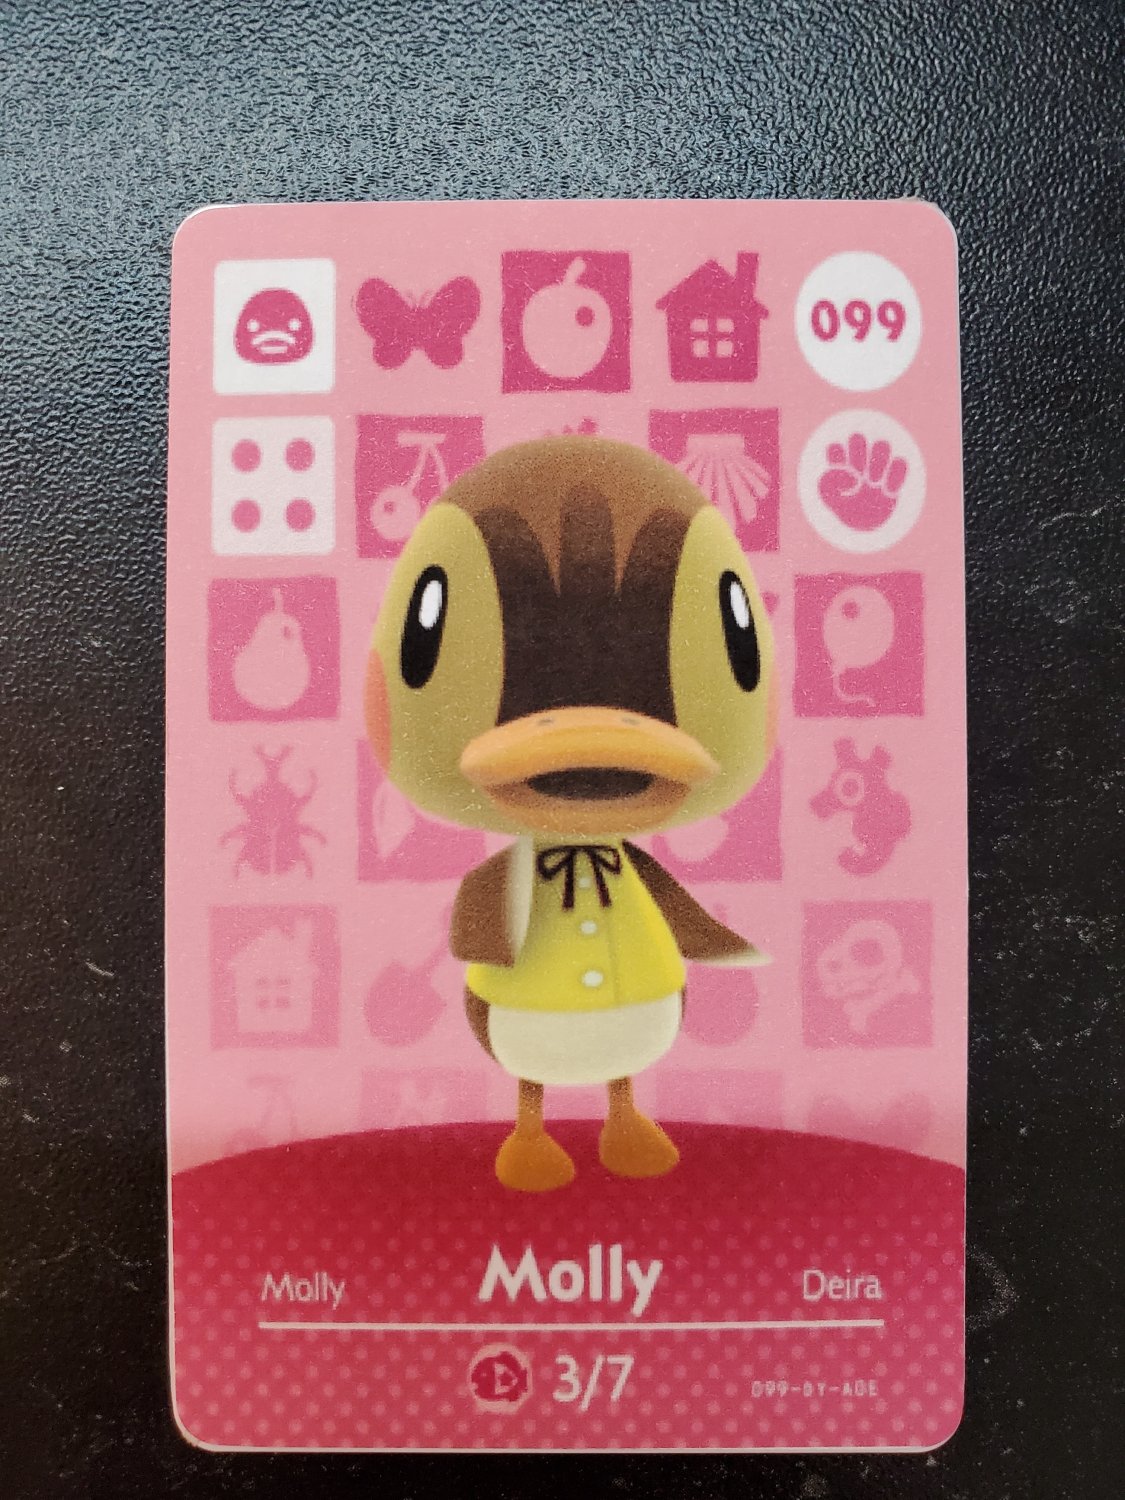 099 Molly Amiibo Card for Animal Crossing FAN made